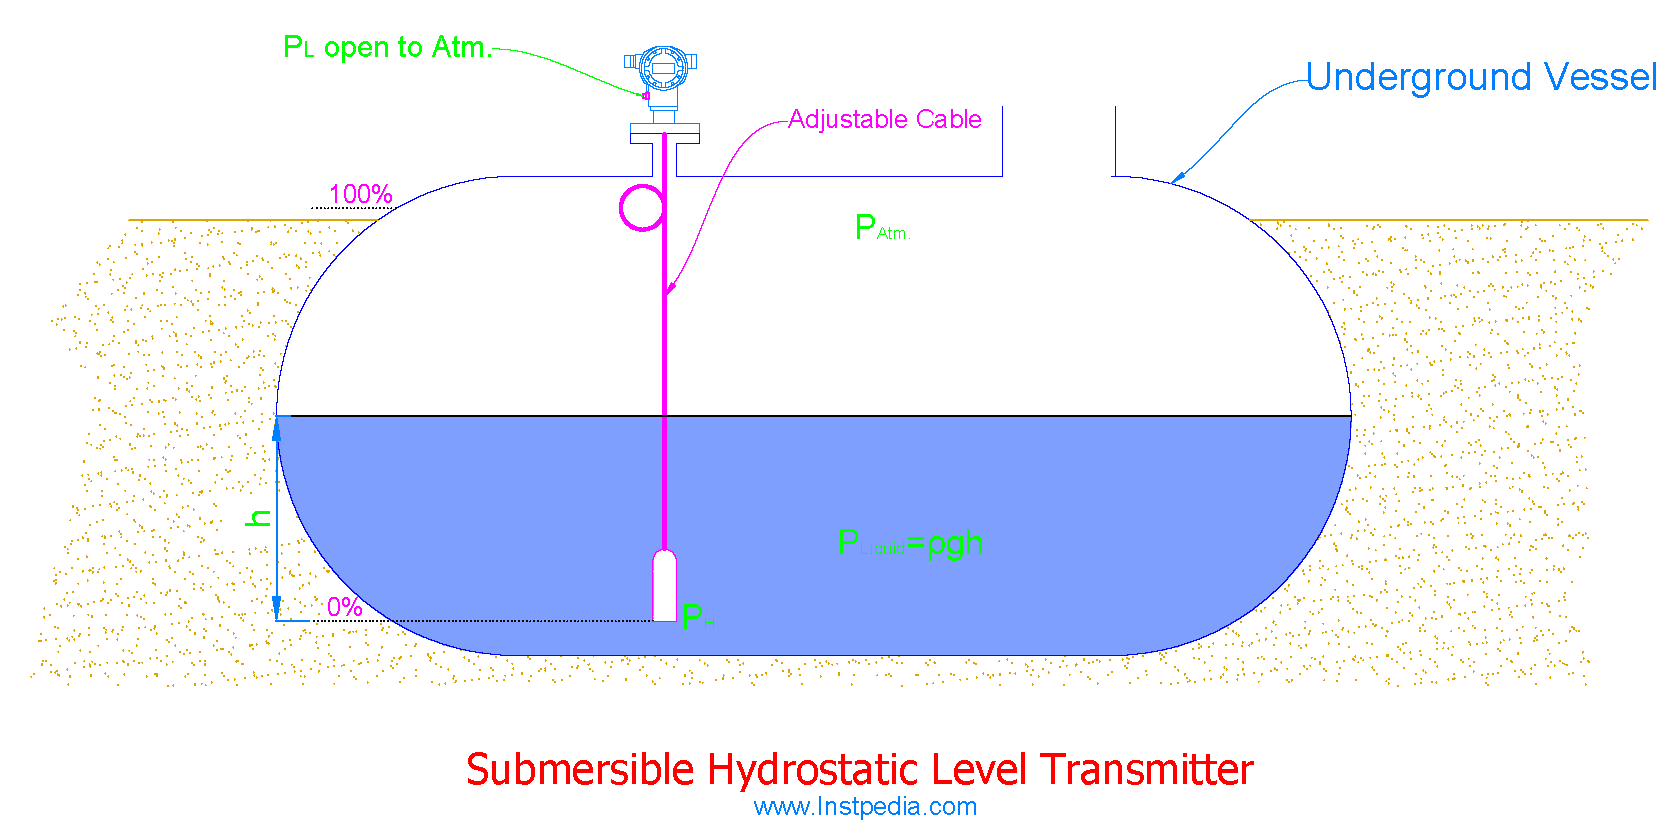 Submersible Hydrostatic Level Transmitter